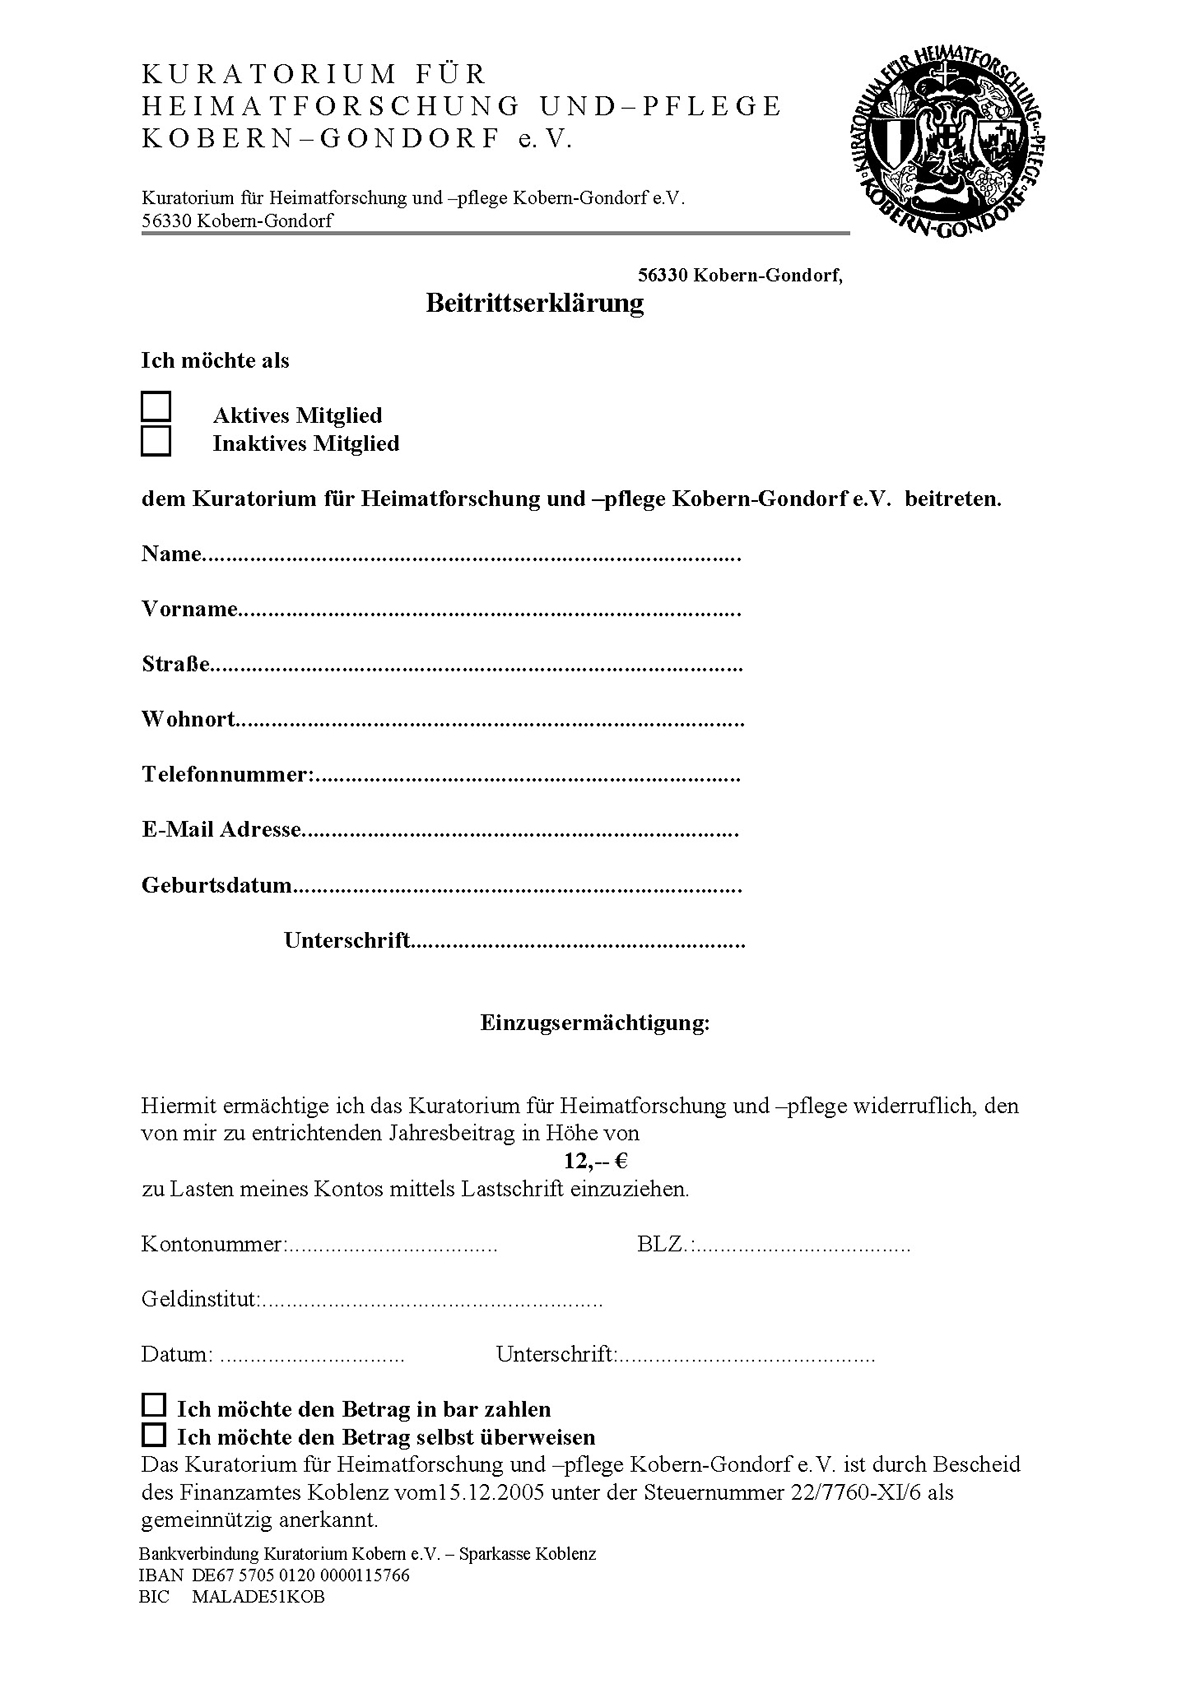 Beitrittsformular PDF Kuratorium Kobern e.V.